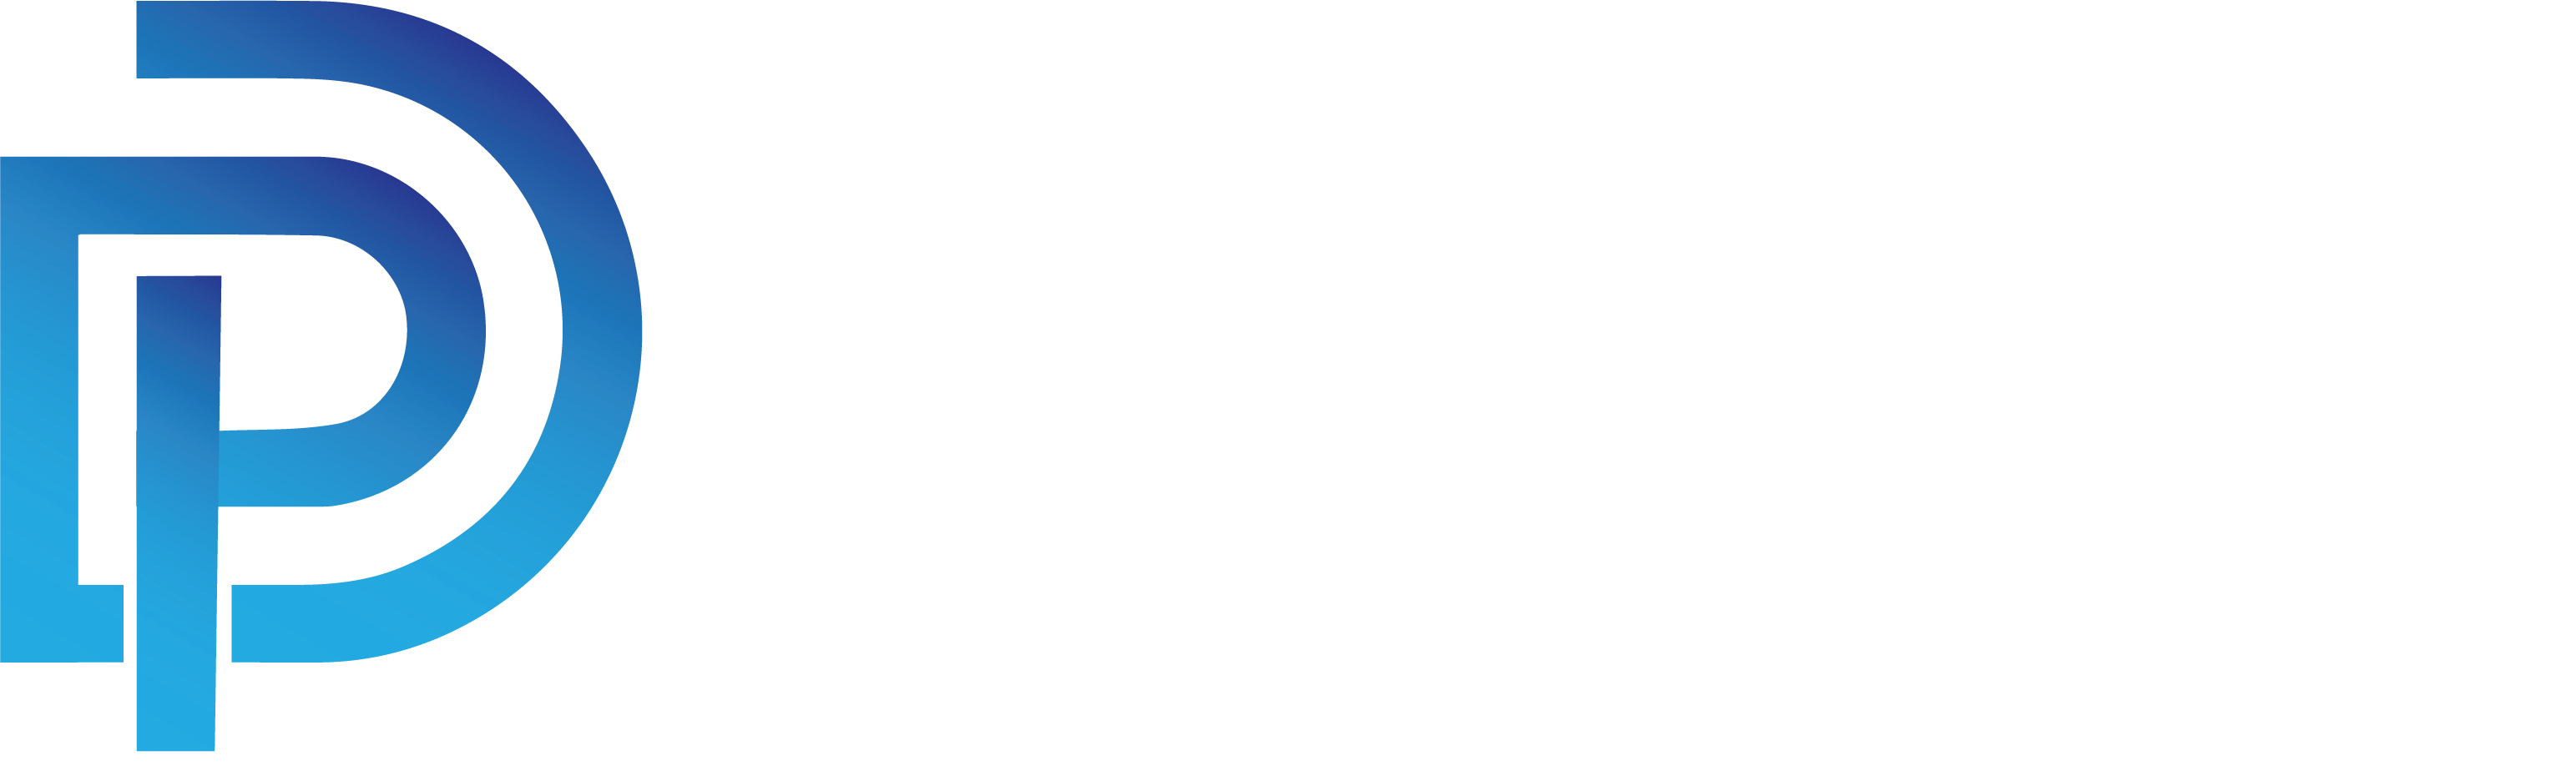 Digipeak | Digital Marketing Agency in Melbourne logo